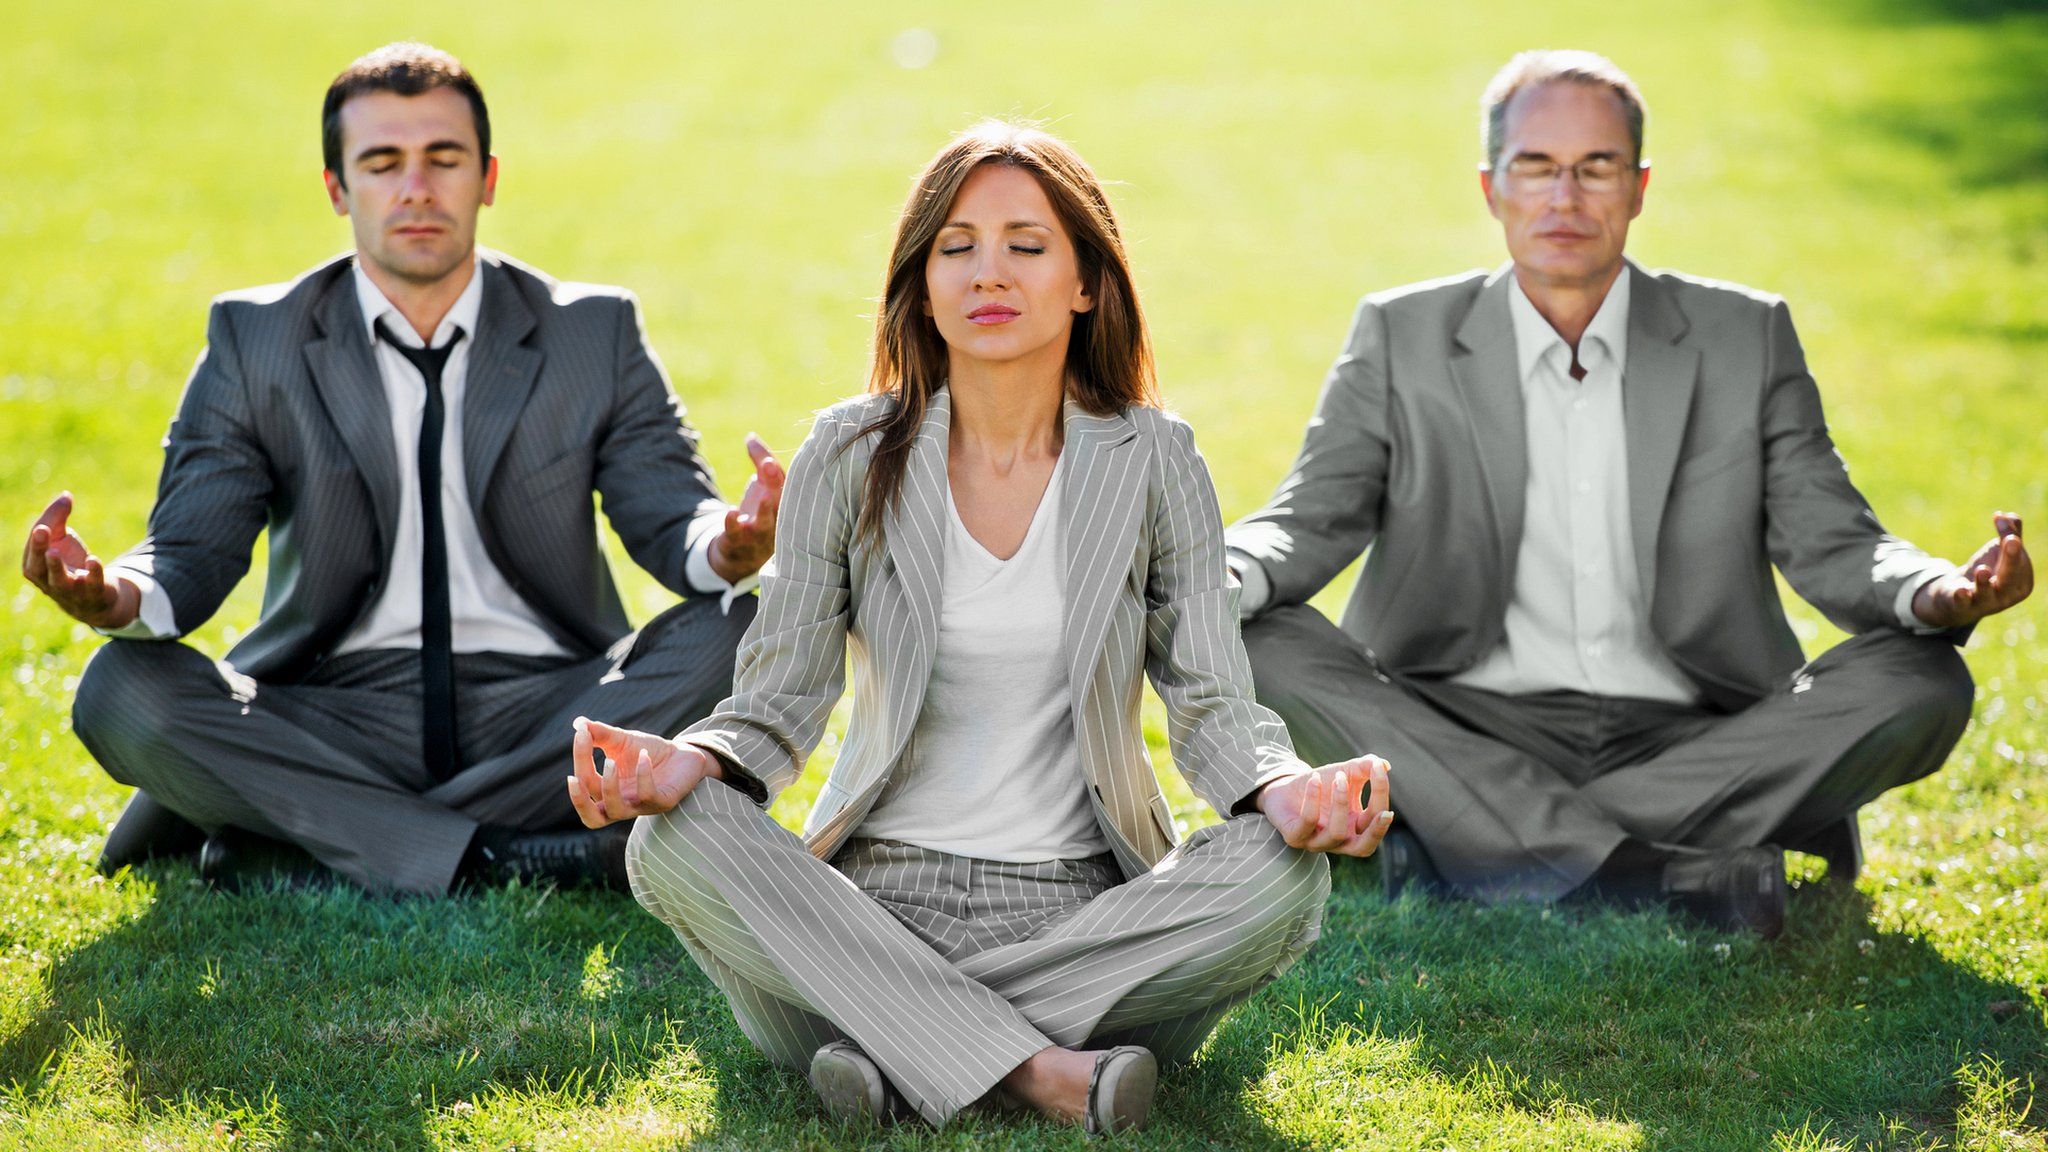 business people meditating